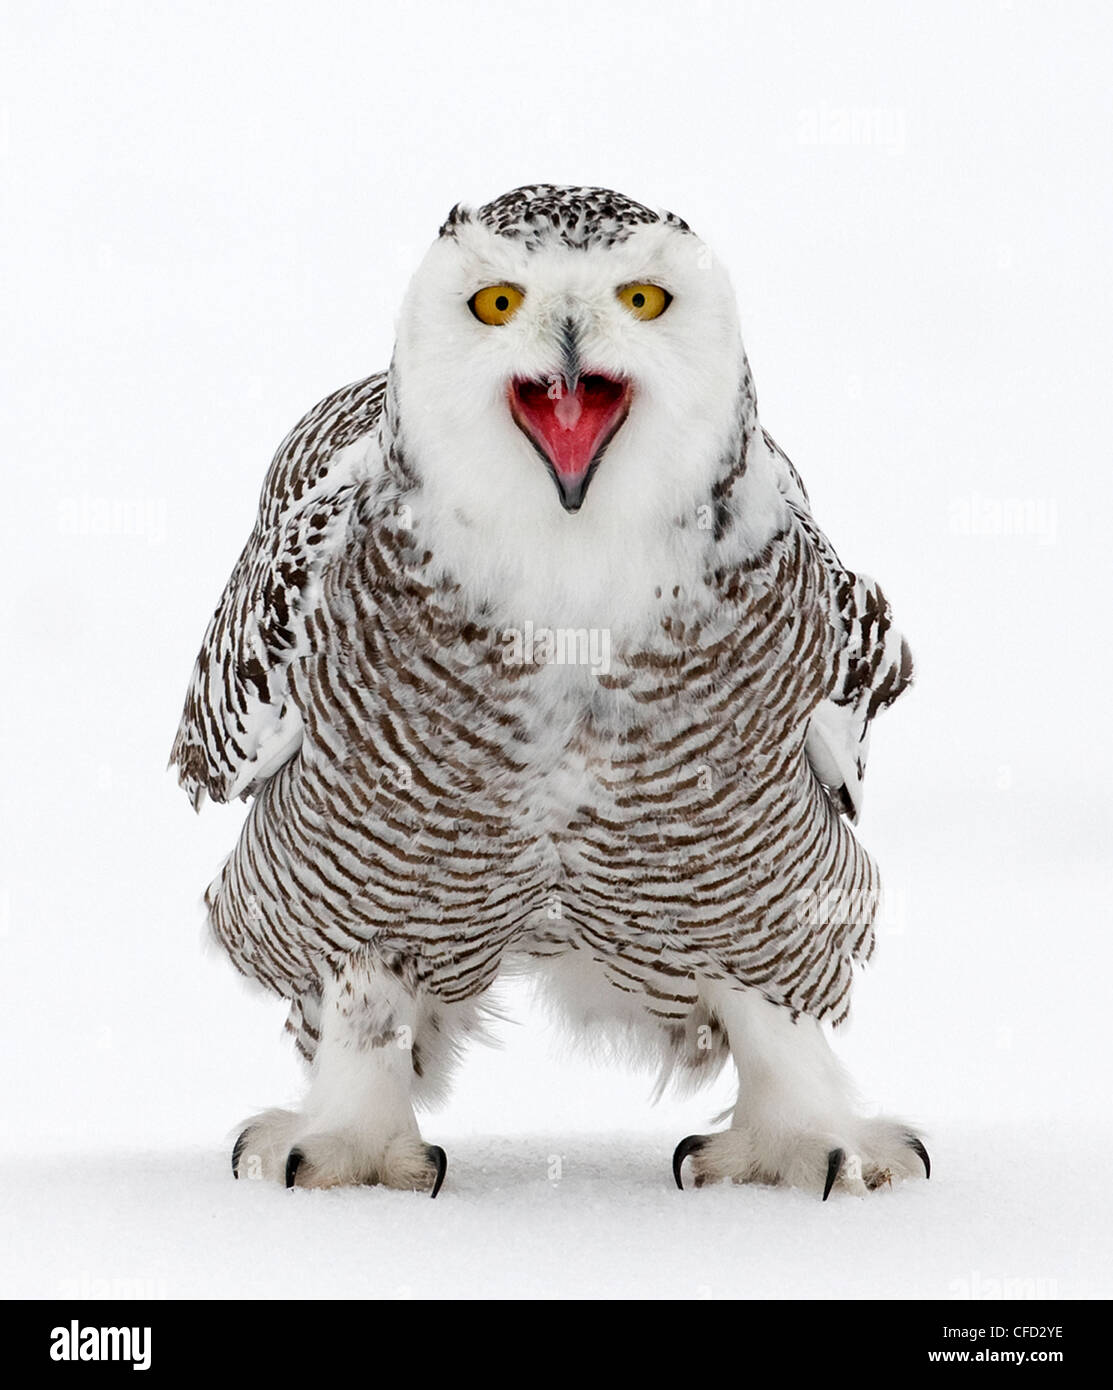 Snowy Owl portrait, Ottawa, Canada Banque D'Images